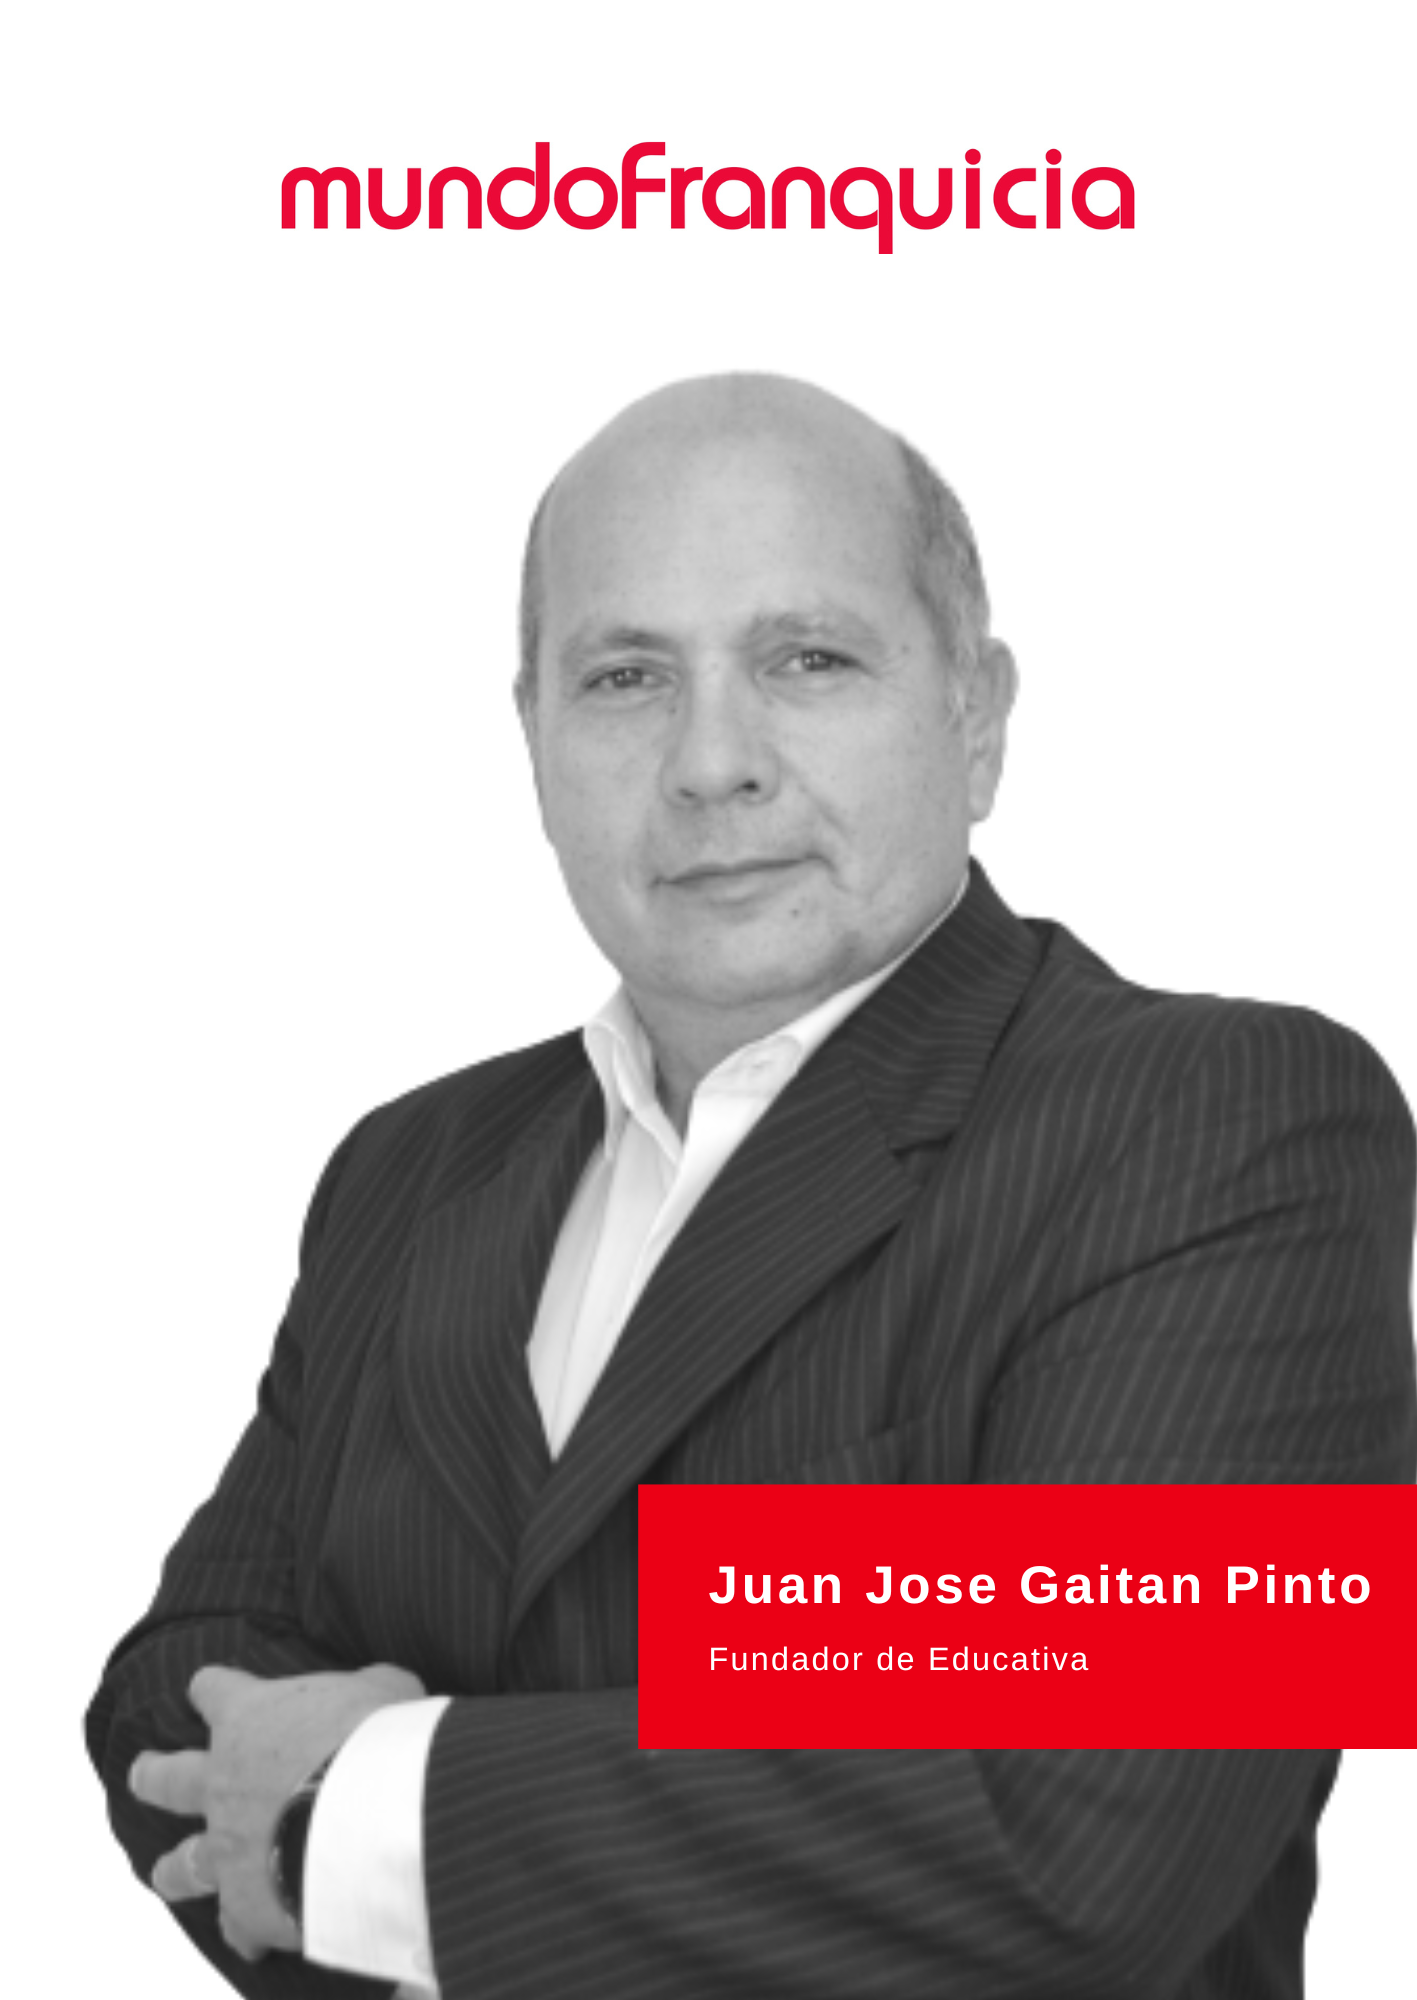 Juan Jose Gaitan Pinto